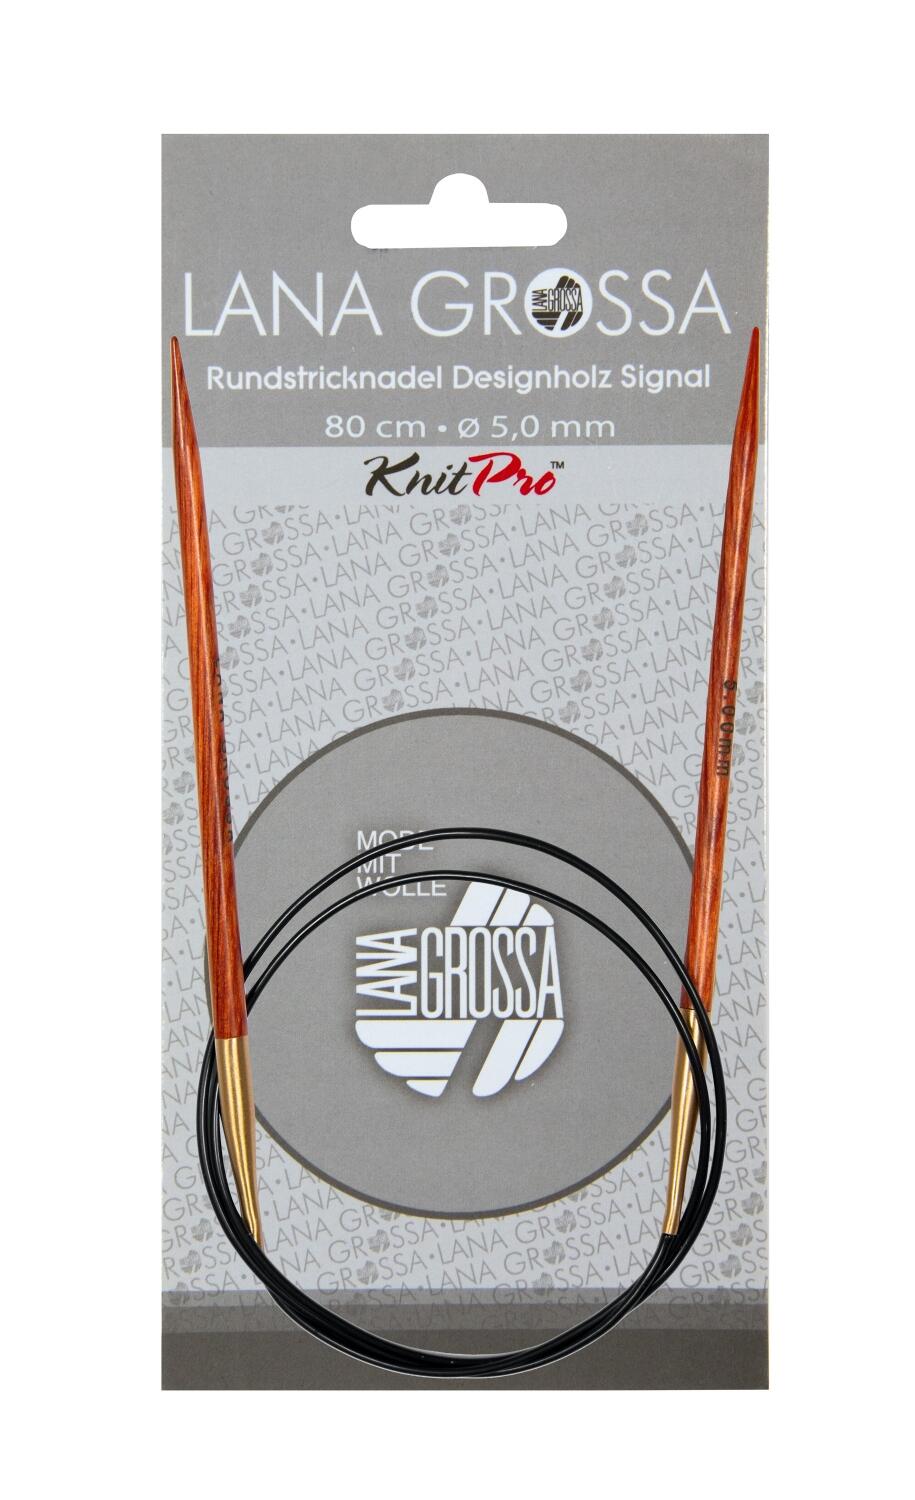 Lana Grossa Rundstricknadel aus Designholz SIGNAL 80cm